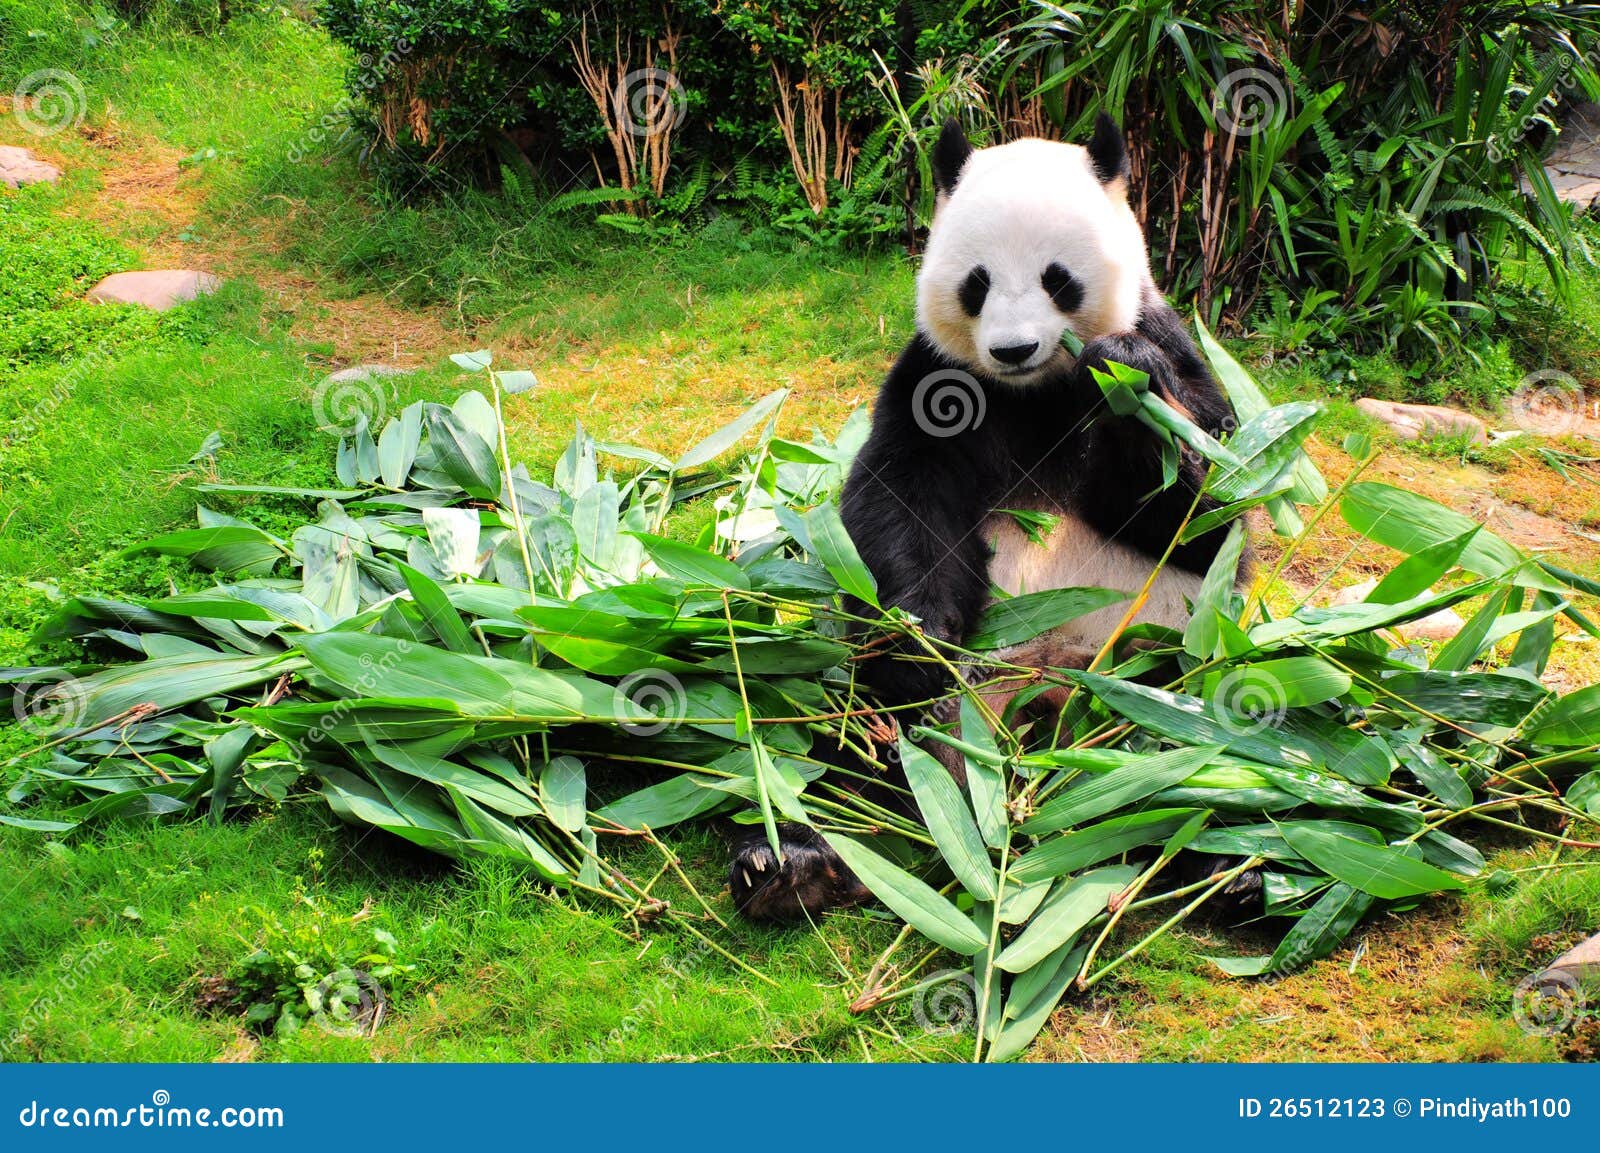 panda eating bamboo leaves